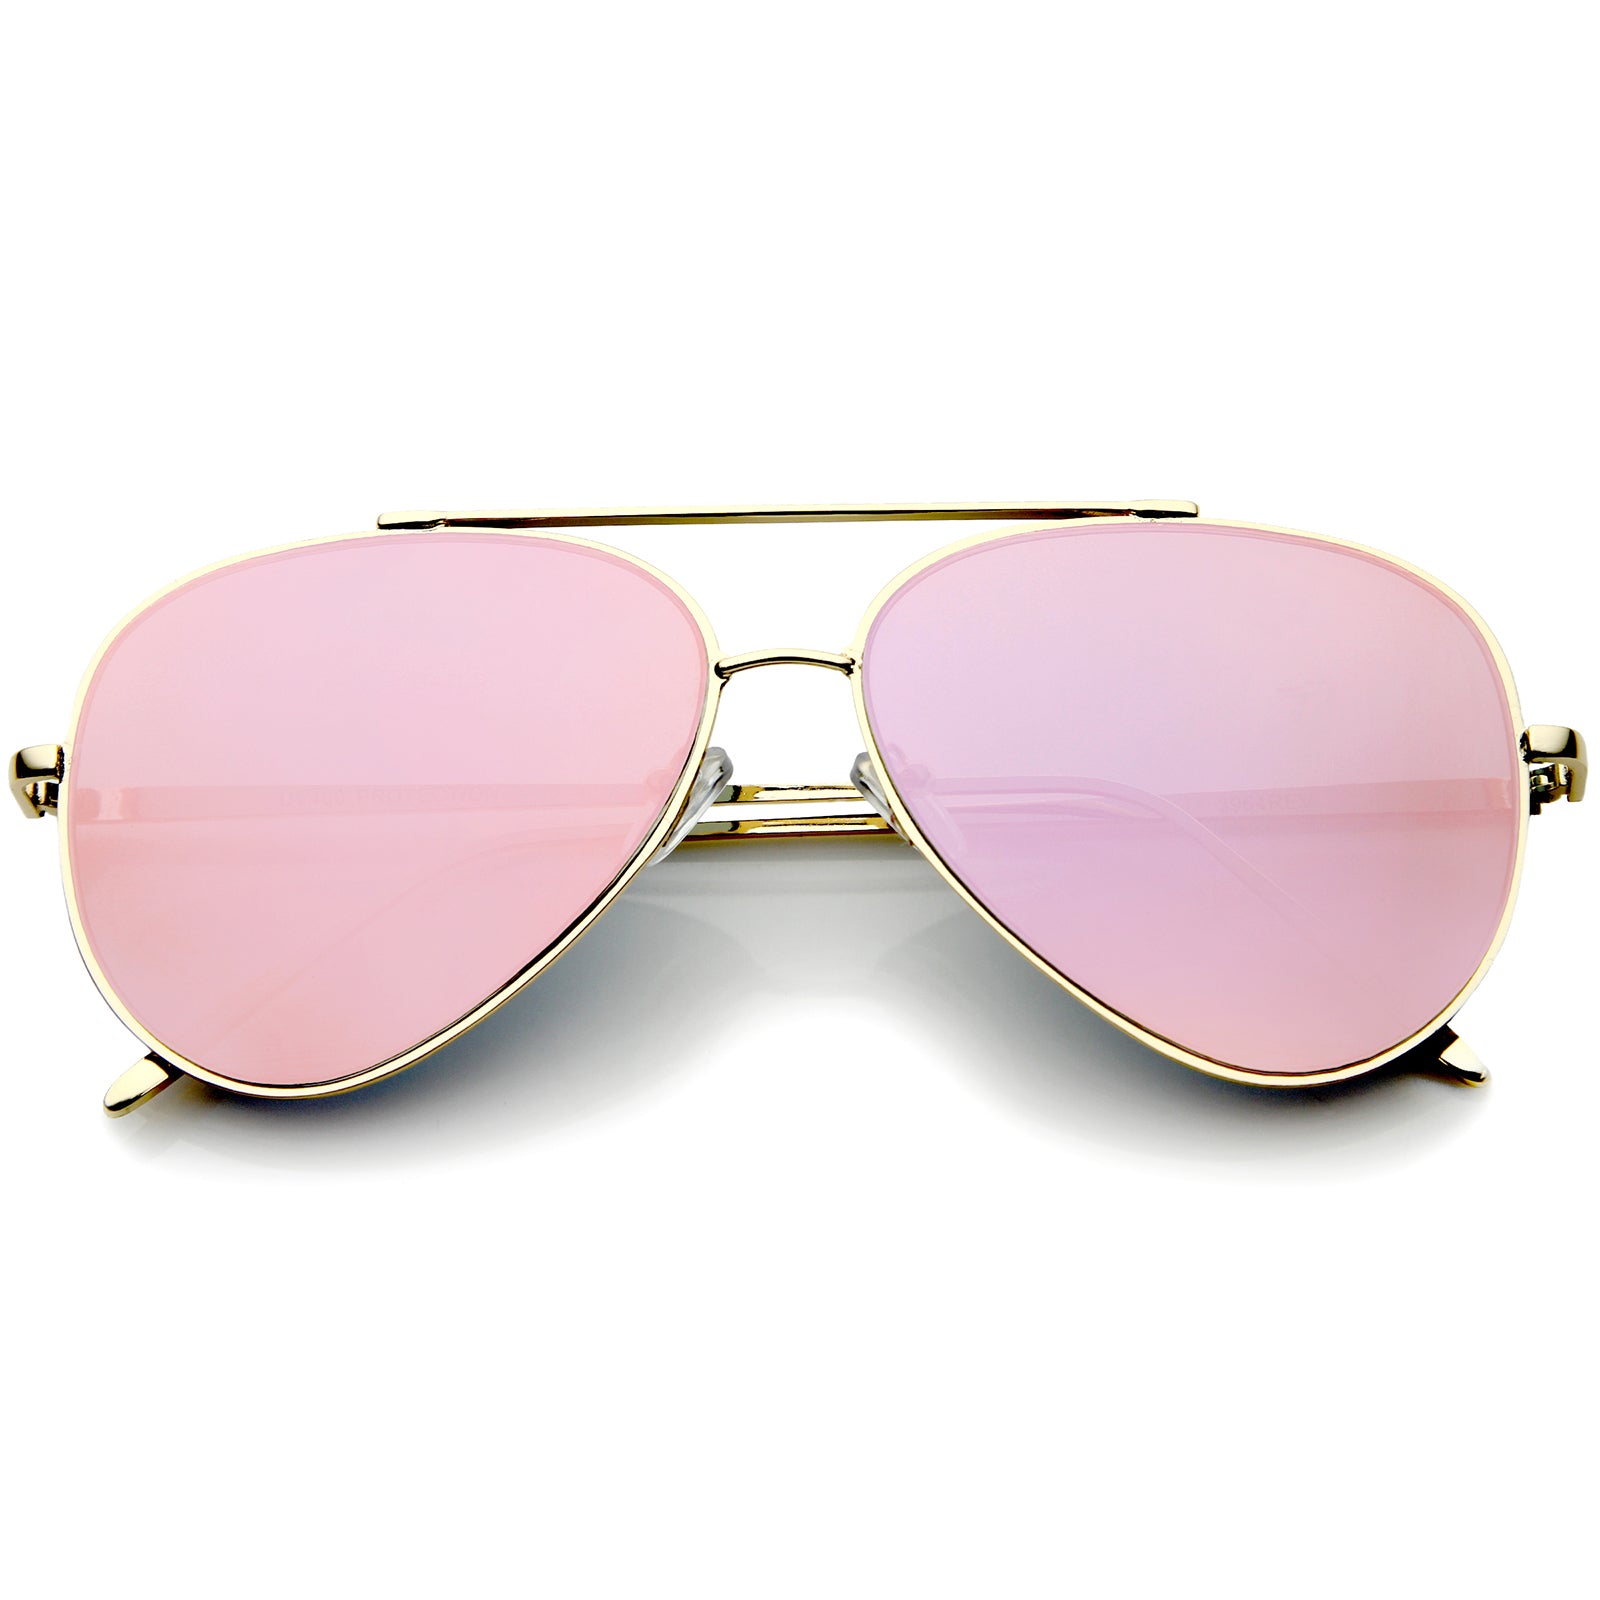 9782 Aviator Sunglasses Black on Pink | Cutler and Gross